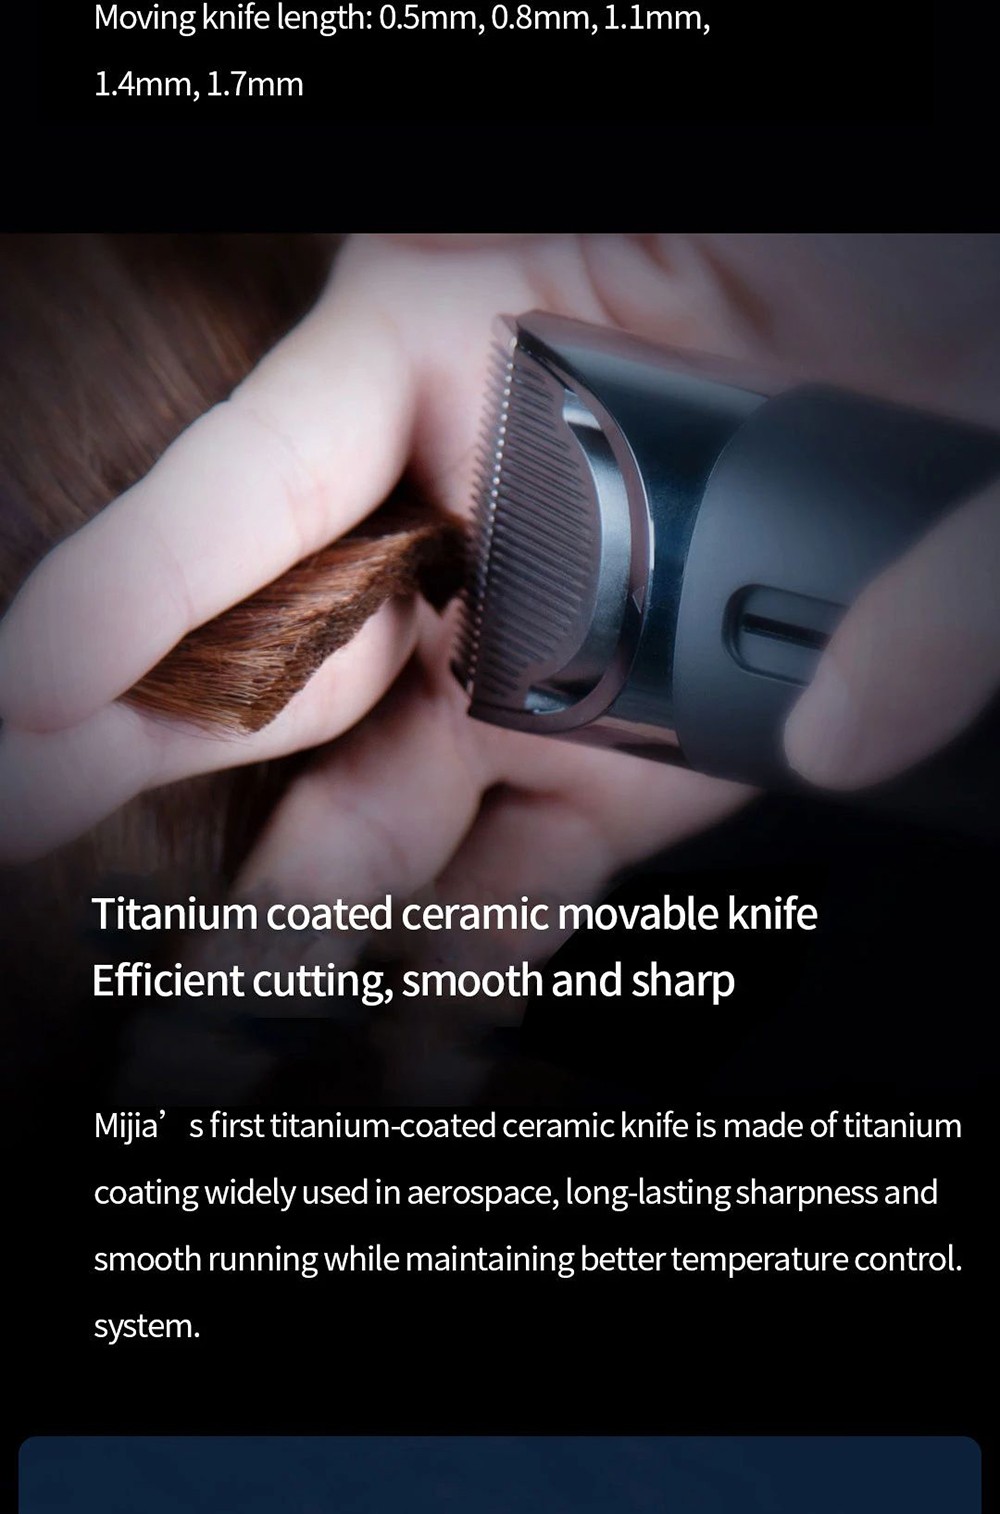 Xiaomi Mijia Electric Hair Clipper 0.5-1.7mm Short Hair Trimming lPX7 Waterproof 180min Endurance